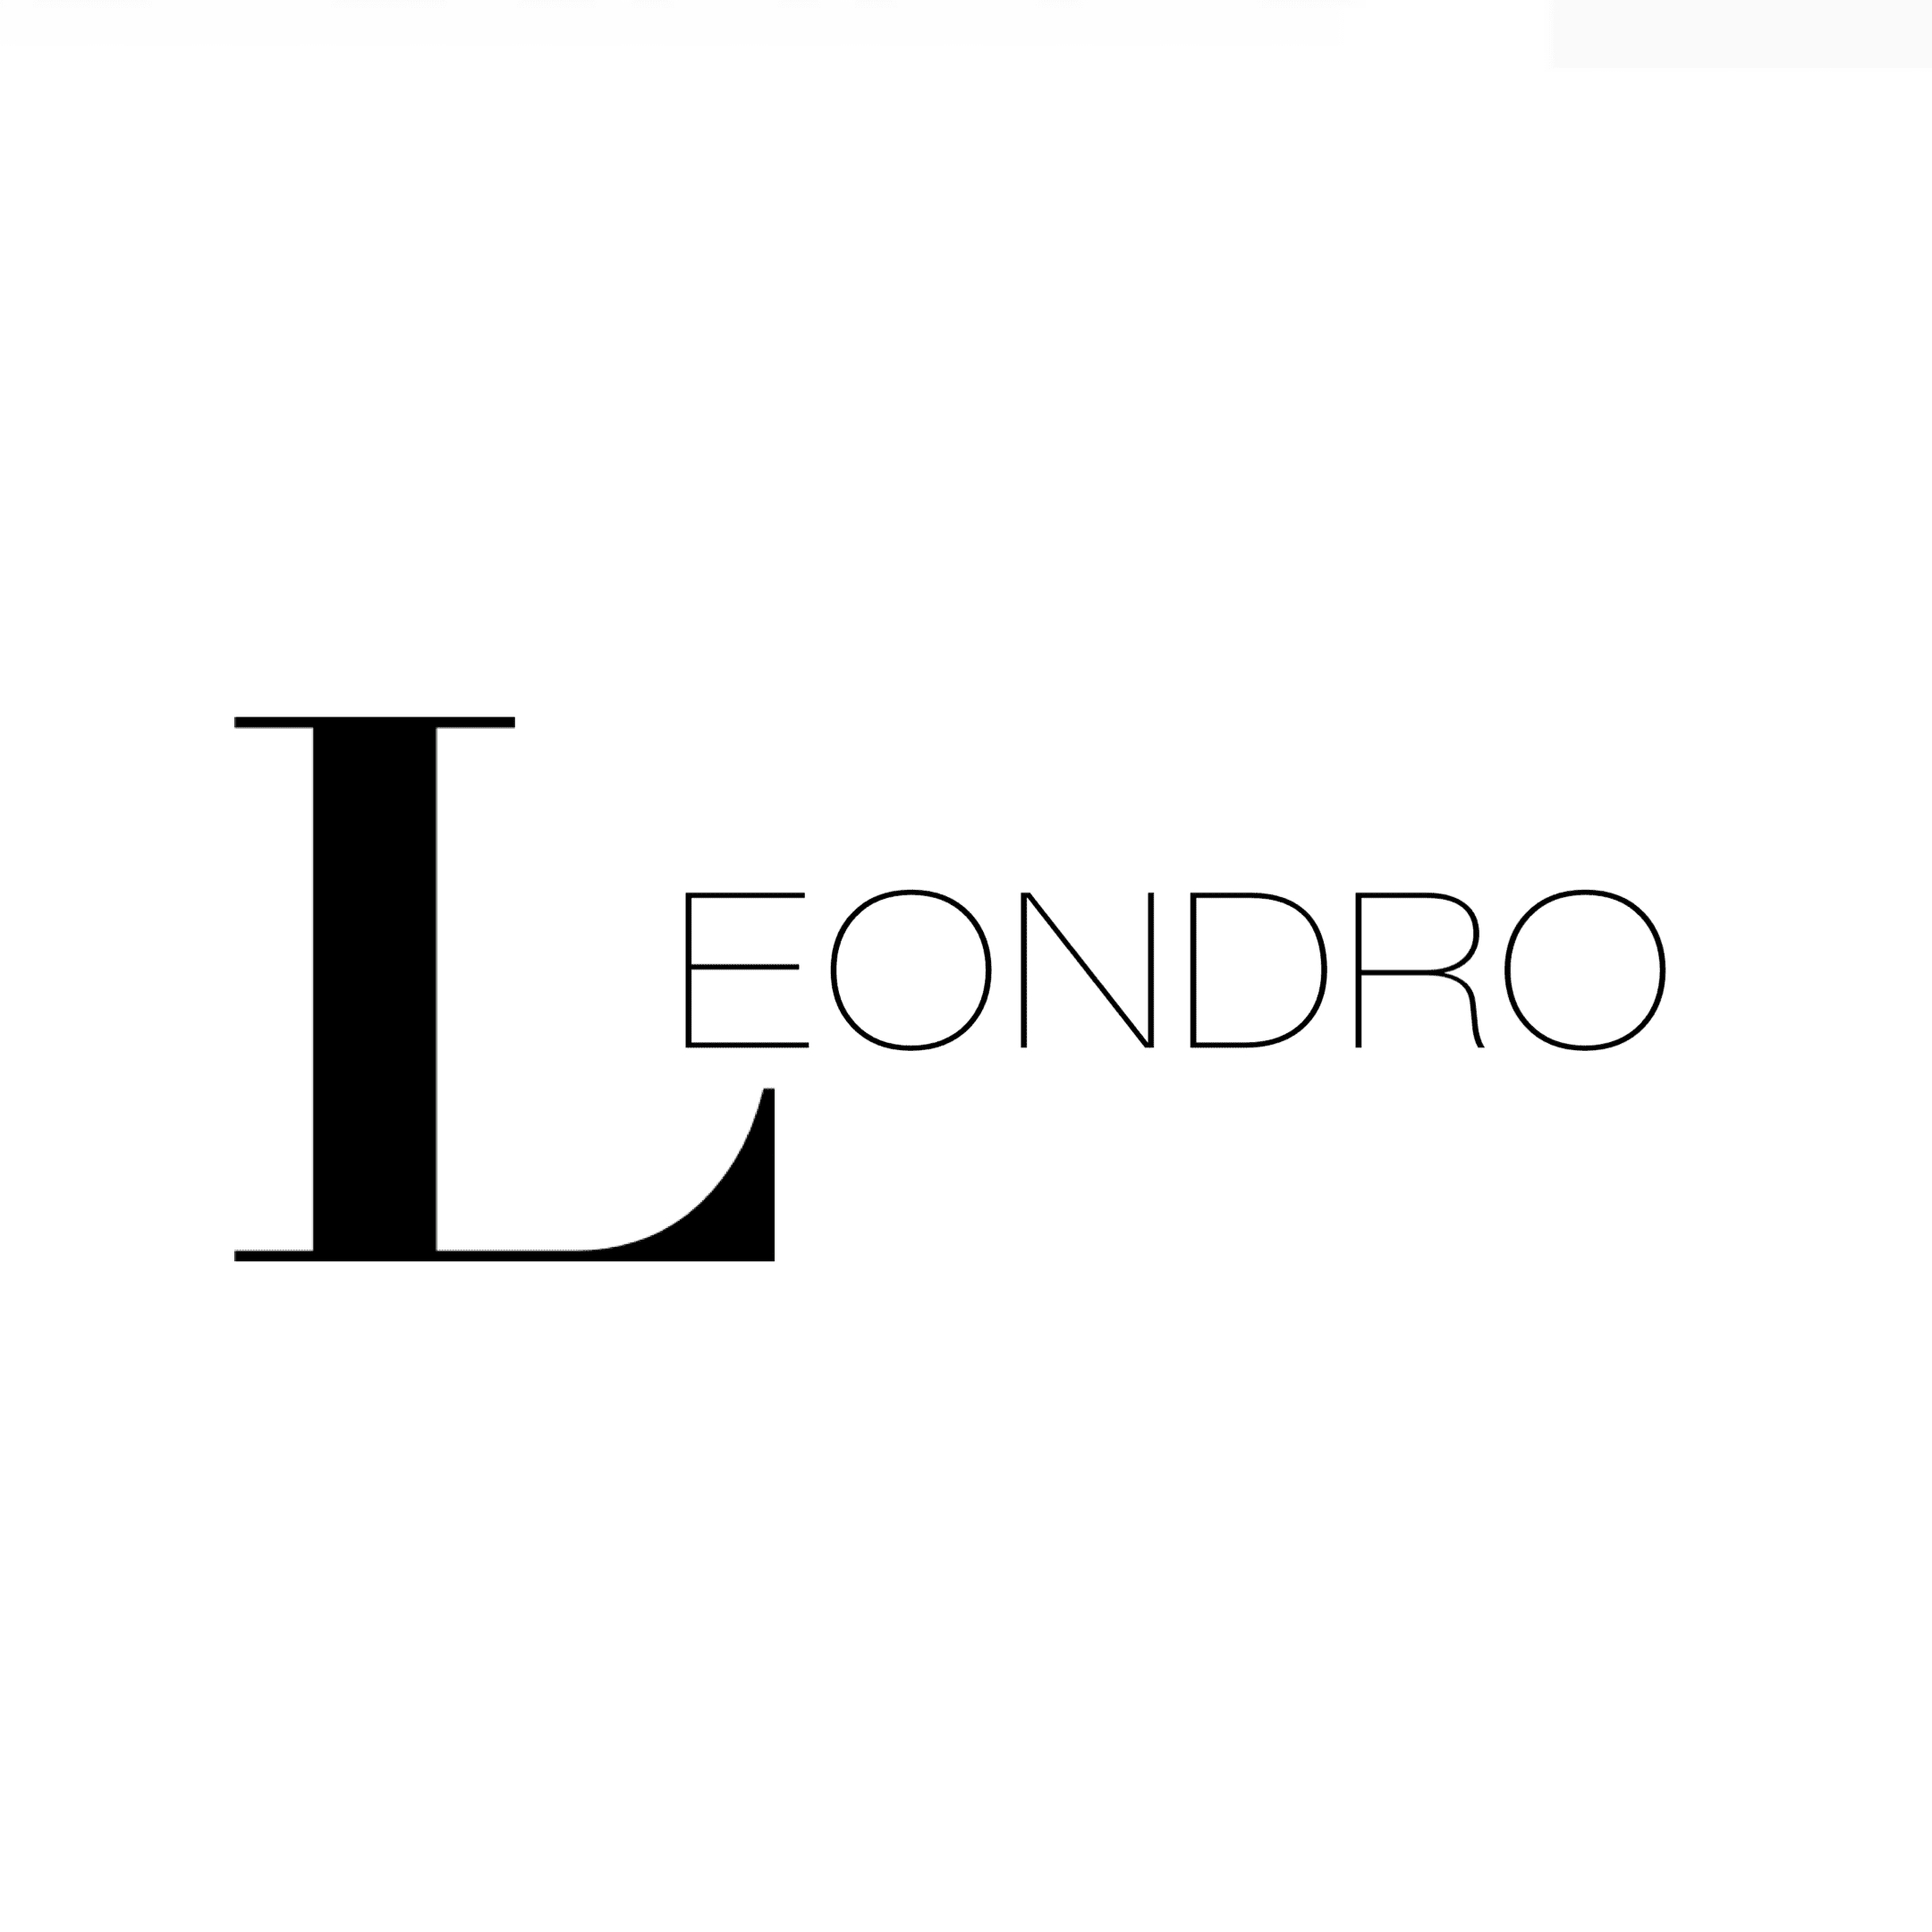 Leondro